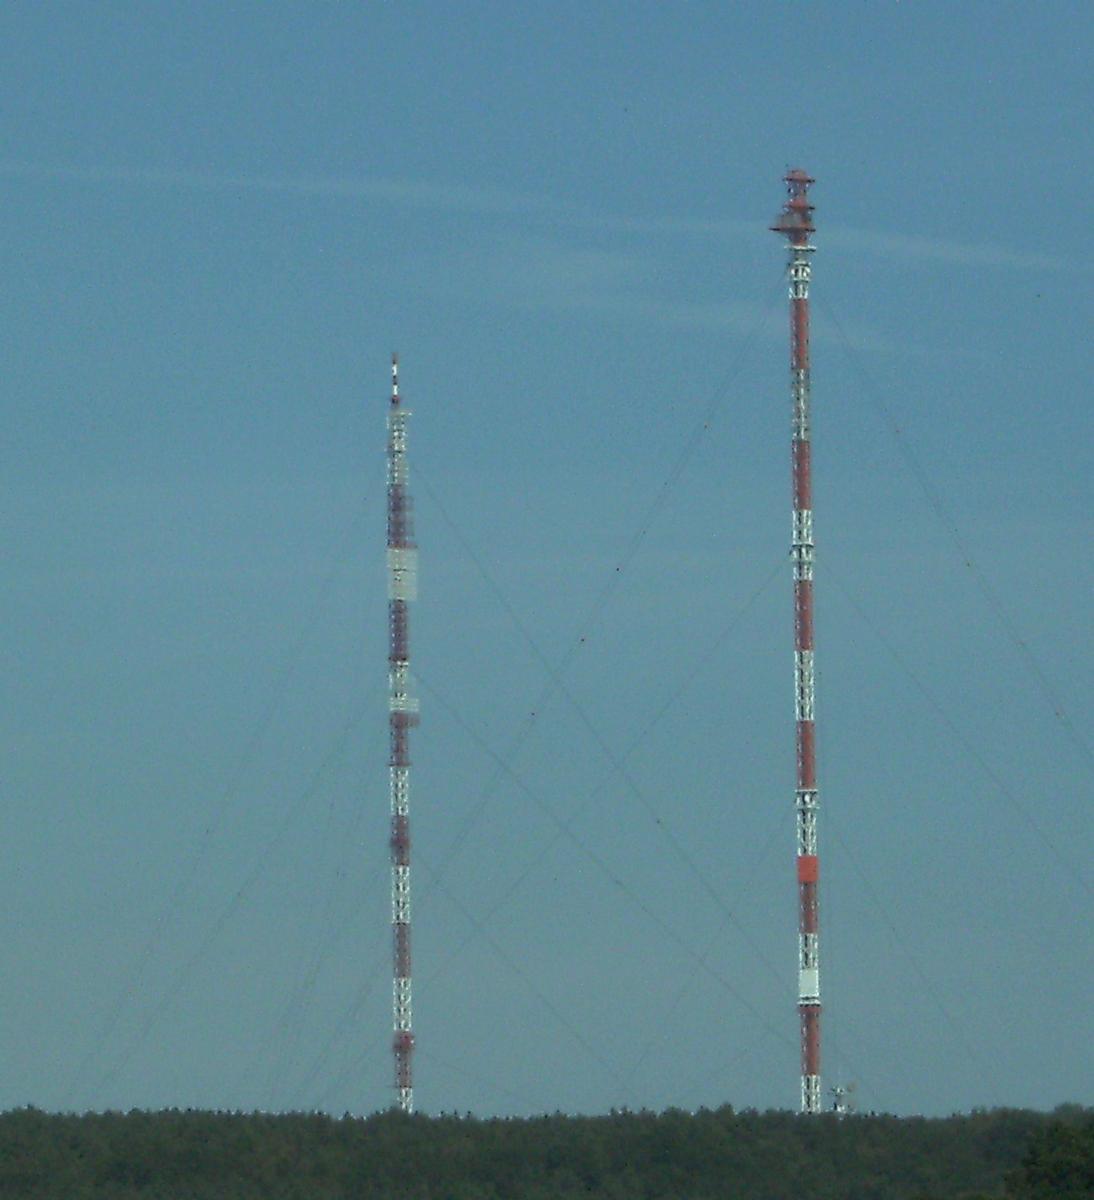 Richtfunkmast Gartow – Gartow Transmission Tower 1 